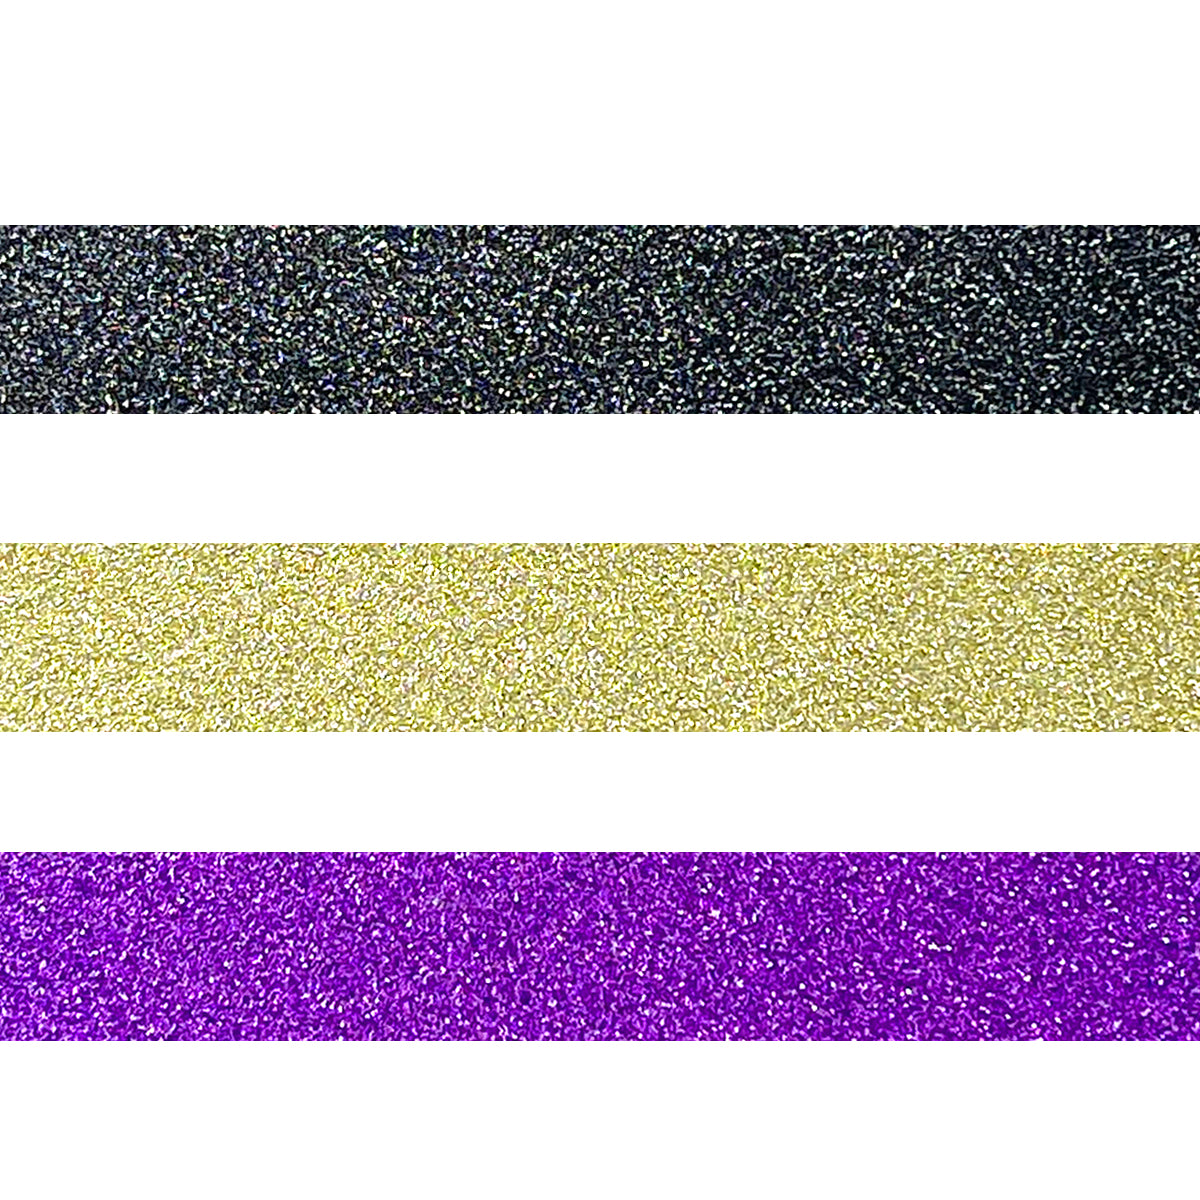 Wrapables Glitter and Shine Washi Tapes Decorative Masking Tapes (Set of 3) Onyx Glitz and Glitter